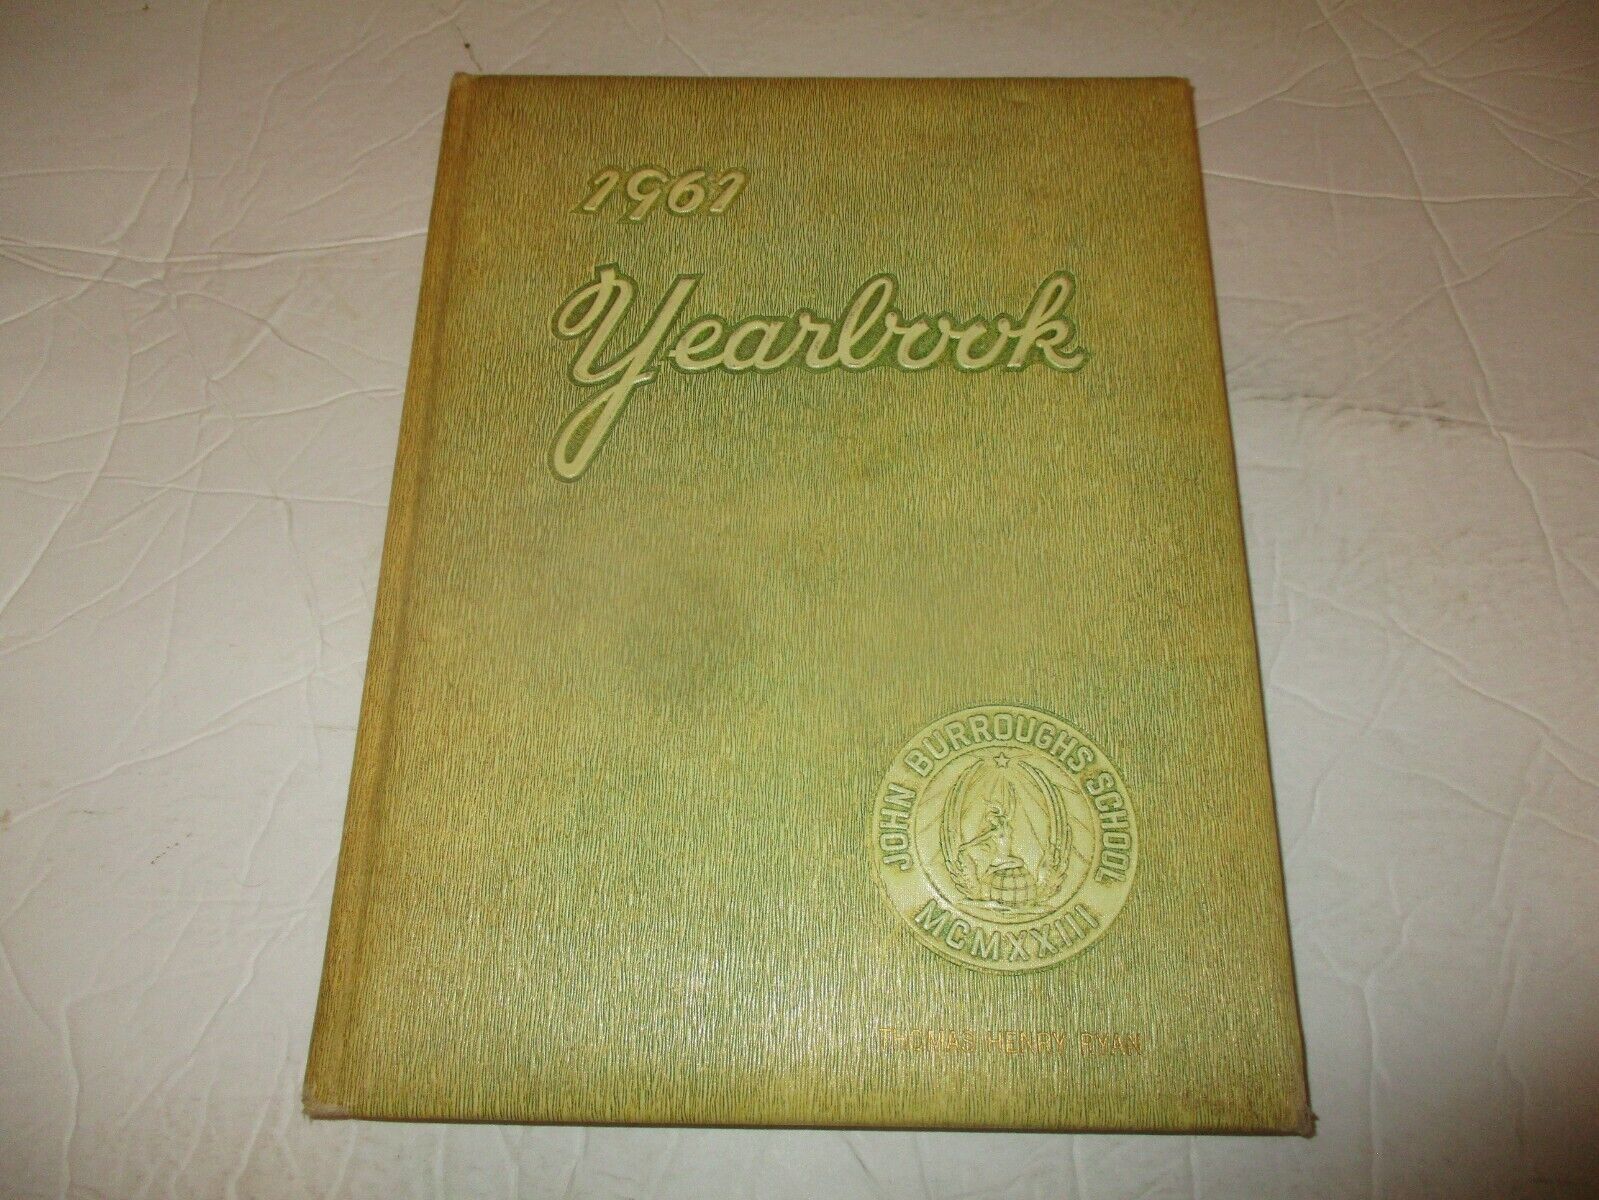 John Burroughs School yearbook 1961 - St. Louis, Missouri (Ladue) college prep